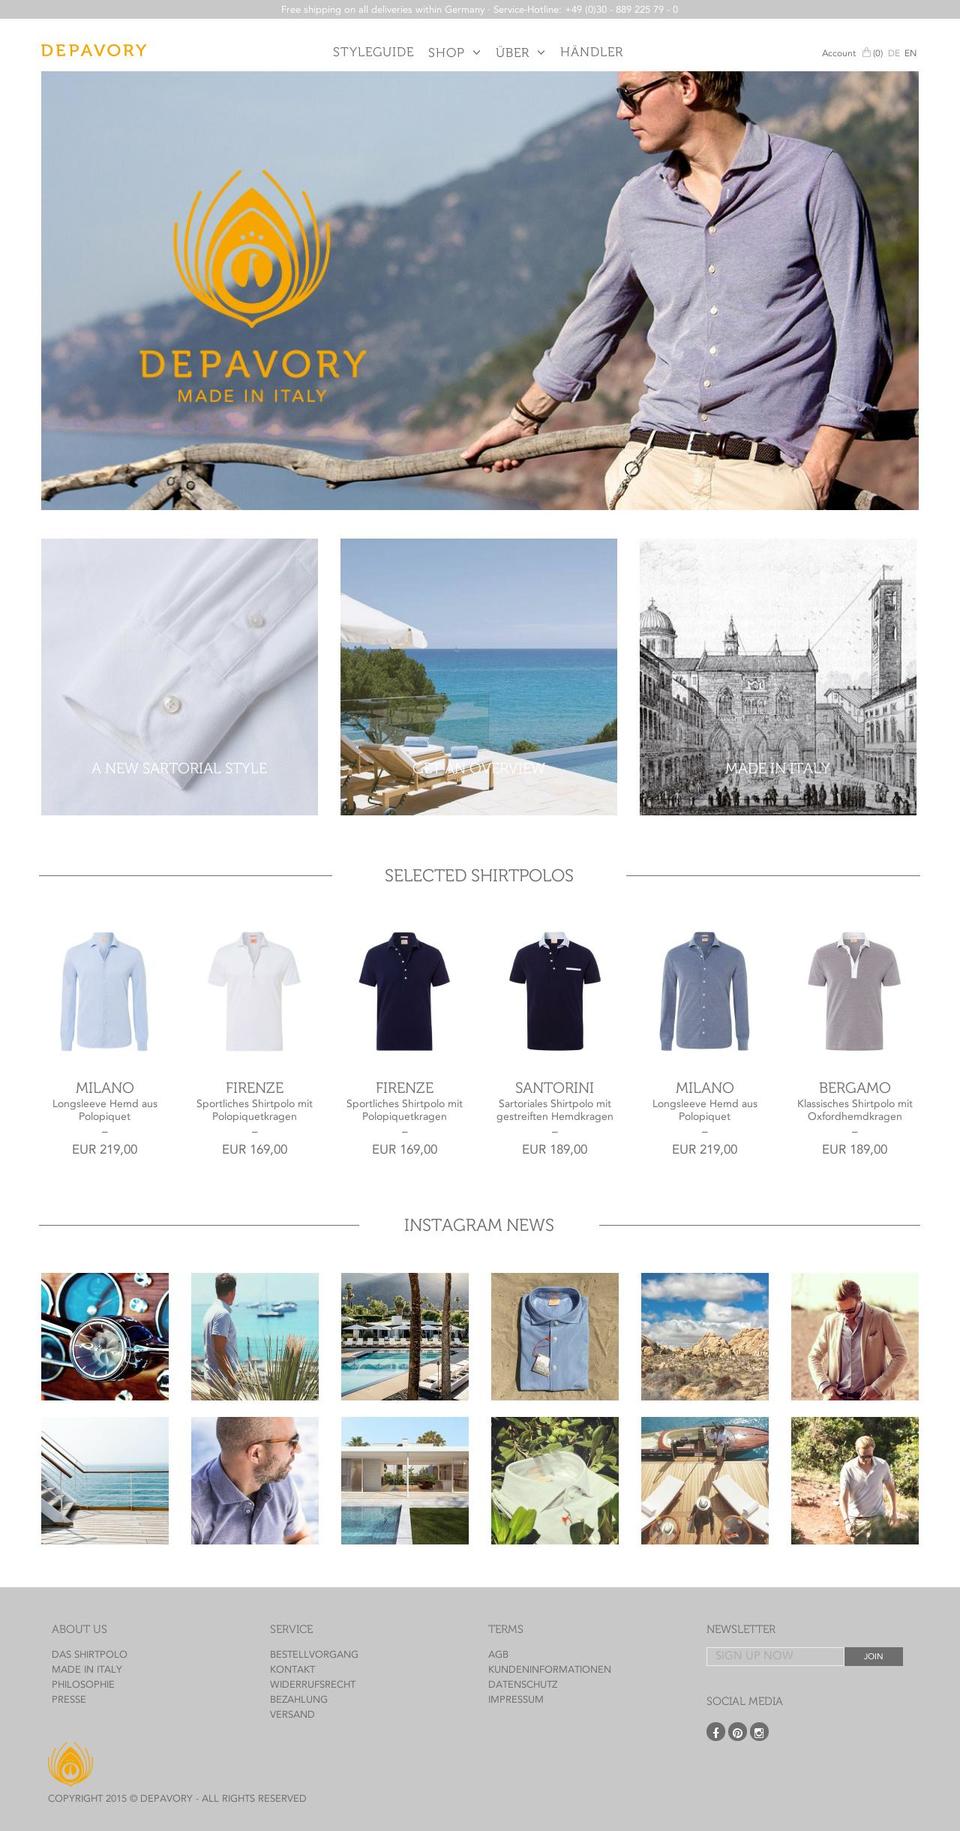 Depavory (2016-05-13) Shopify theme site example shirtpoloworld.de